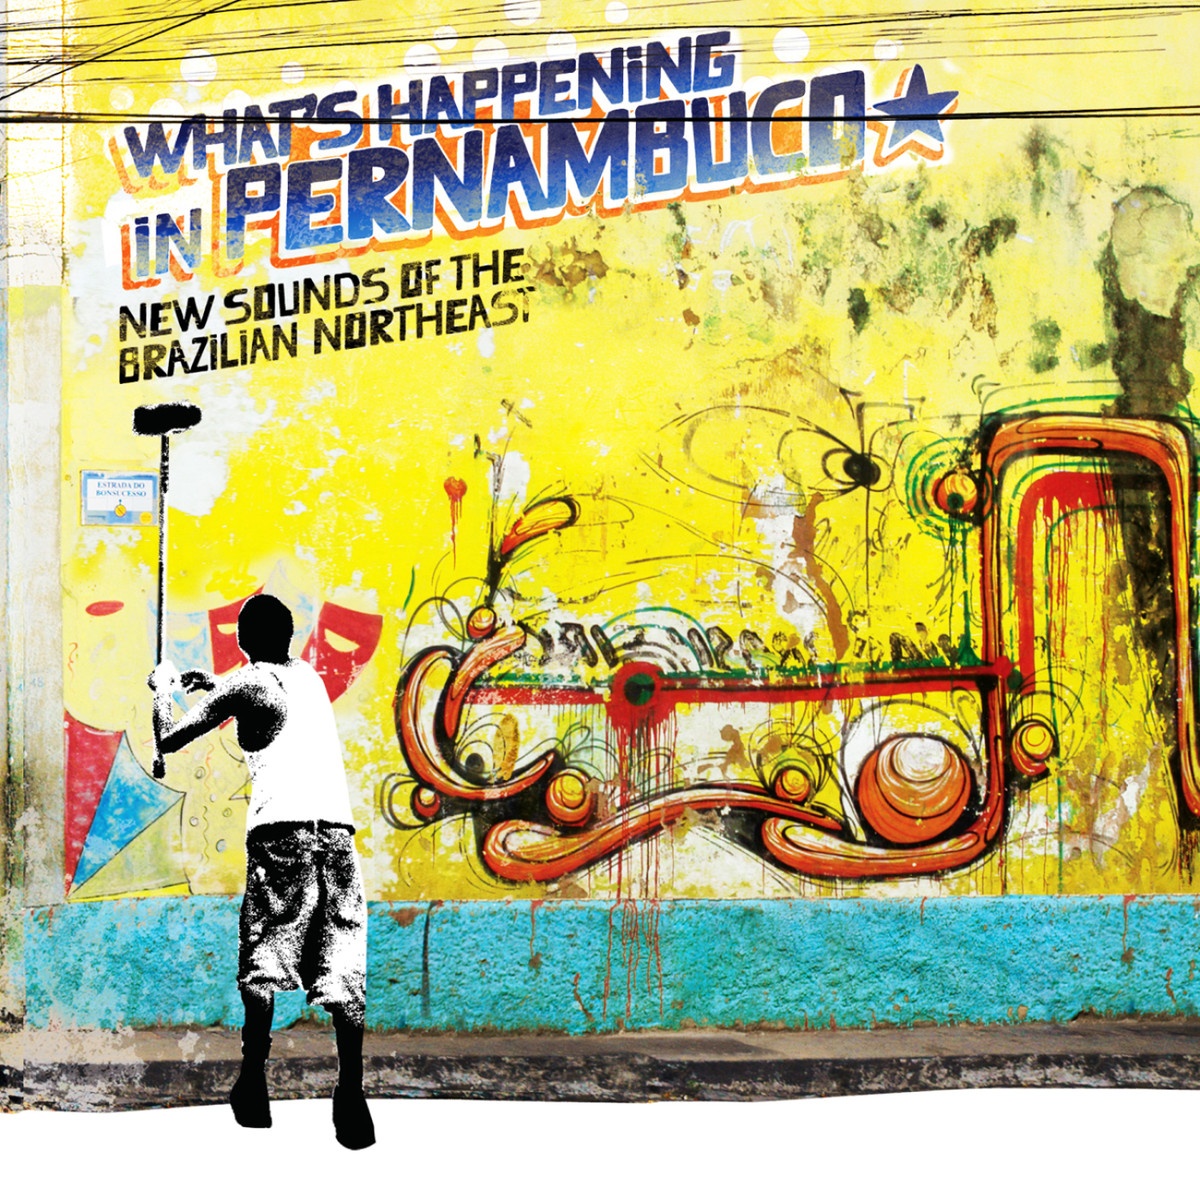 Brazil Classics 7: What's Happening in Pernambuco, New Sounds of the Brazilian Northeast